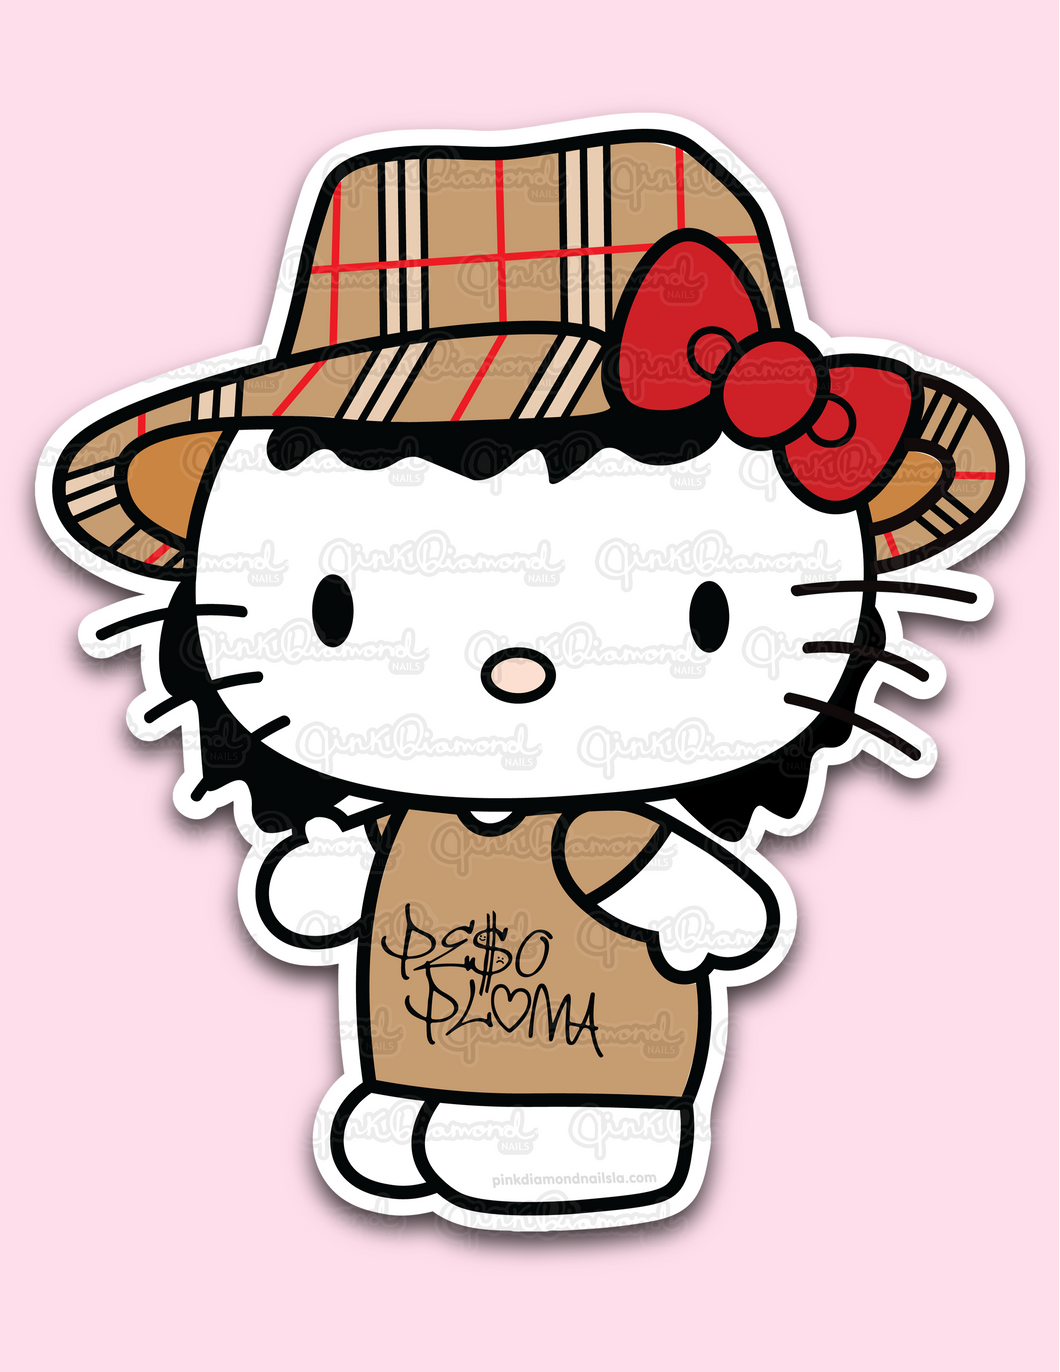 Hello Peso kitty pluma - Vinyl sticker